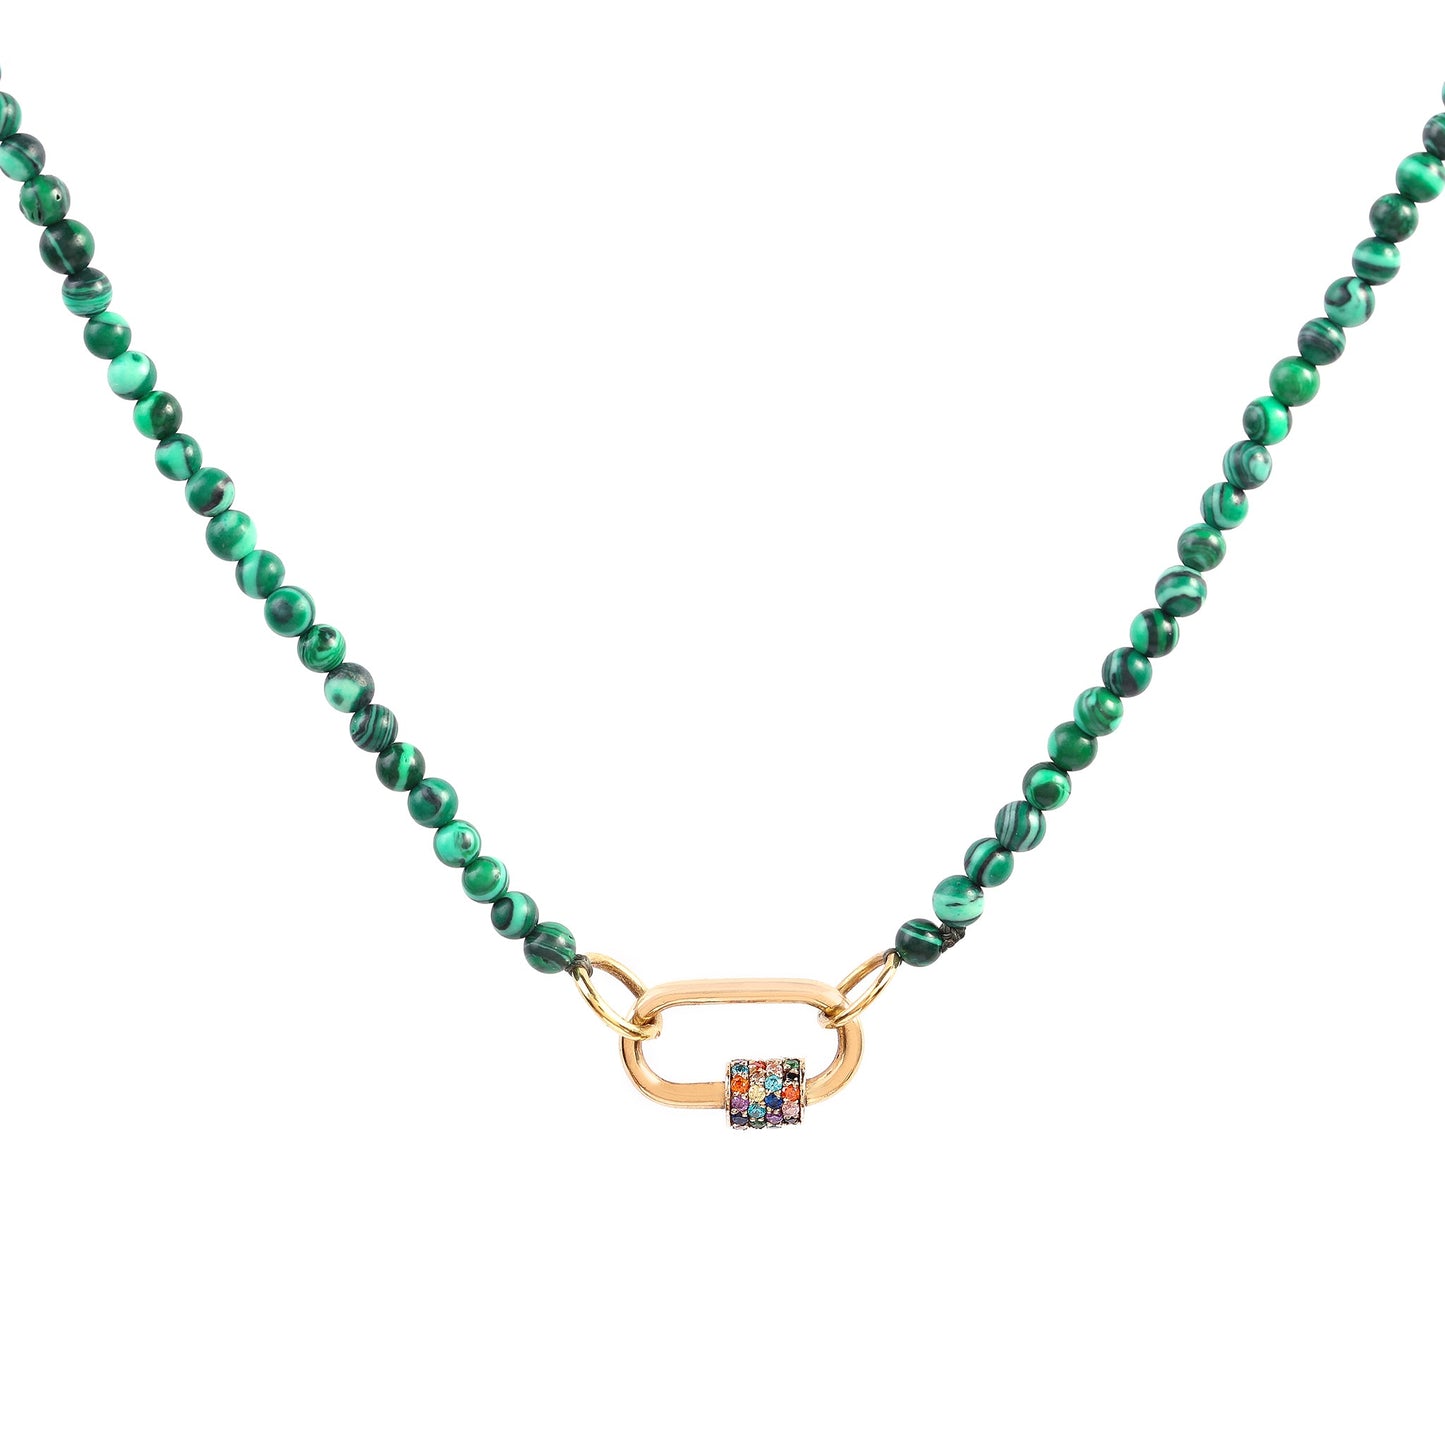 The Lock with a malachite chain - Oria.jewelry